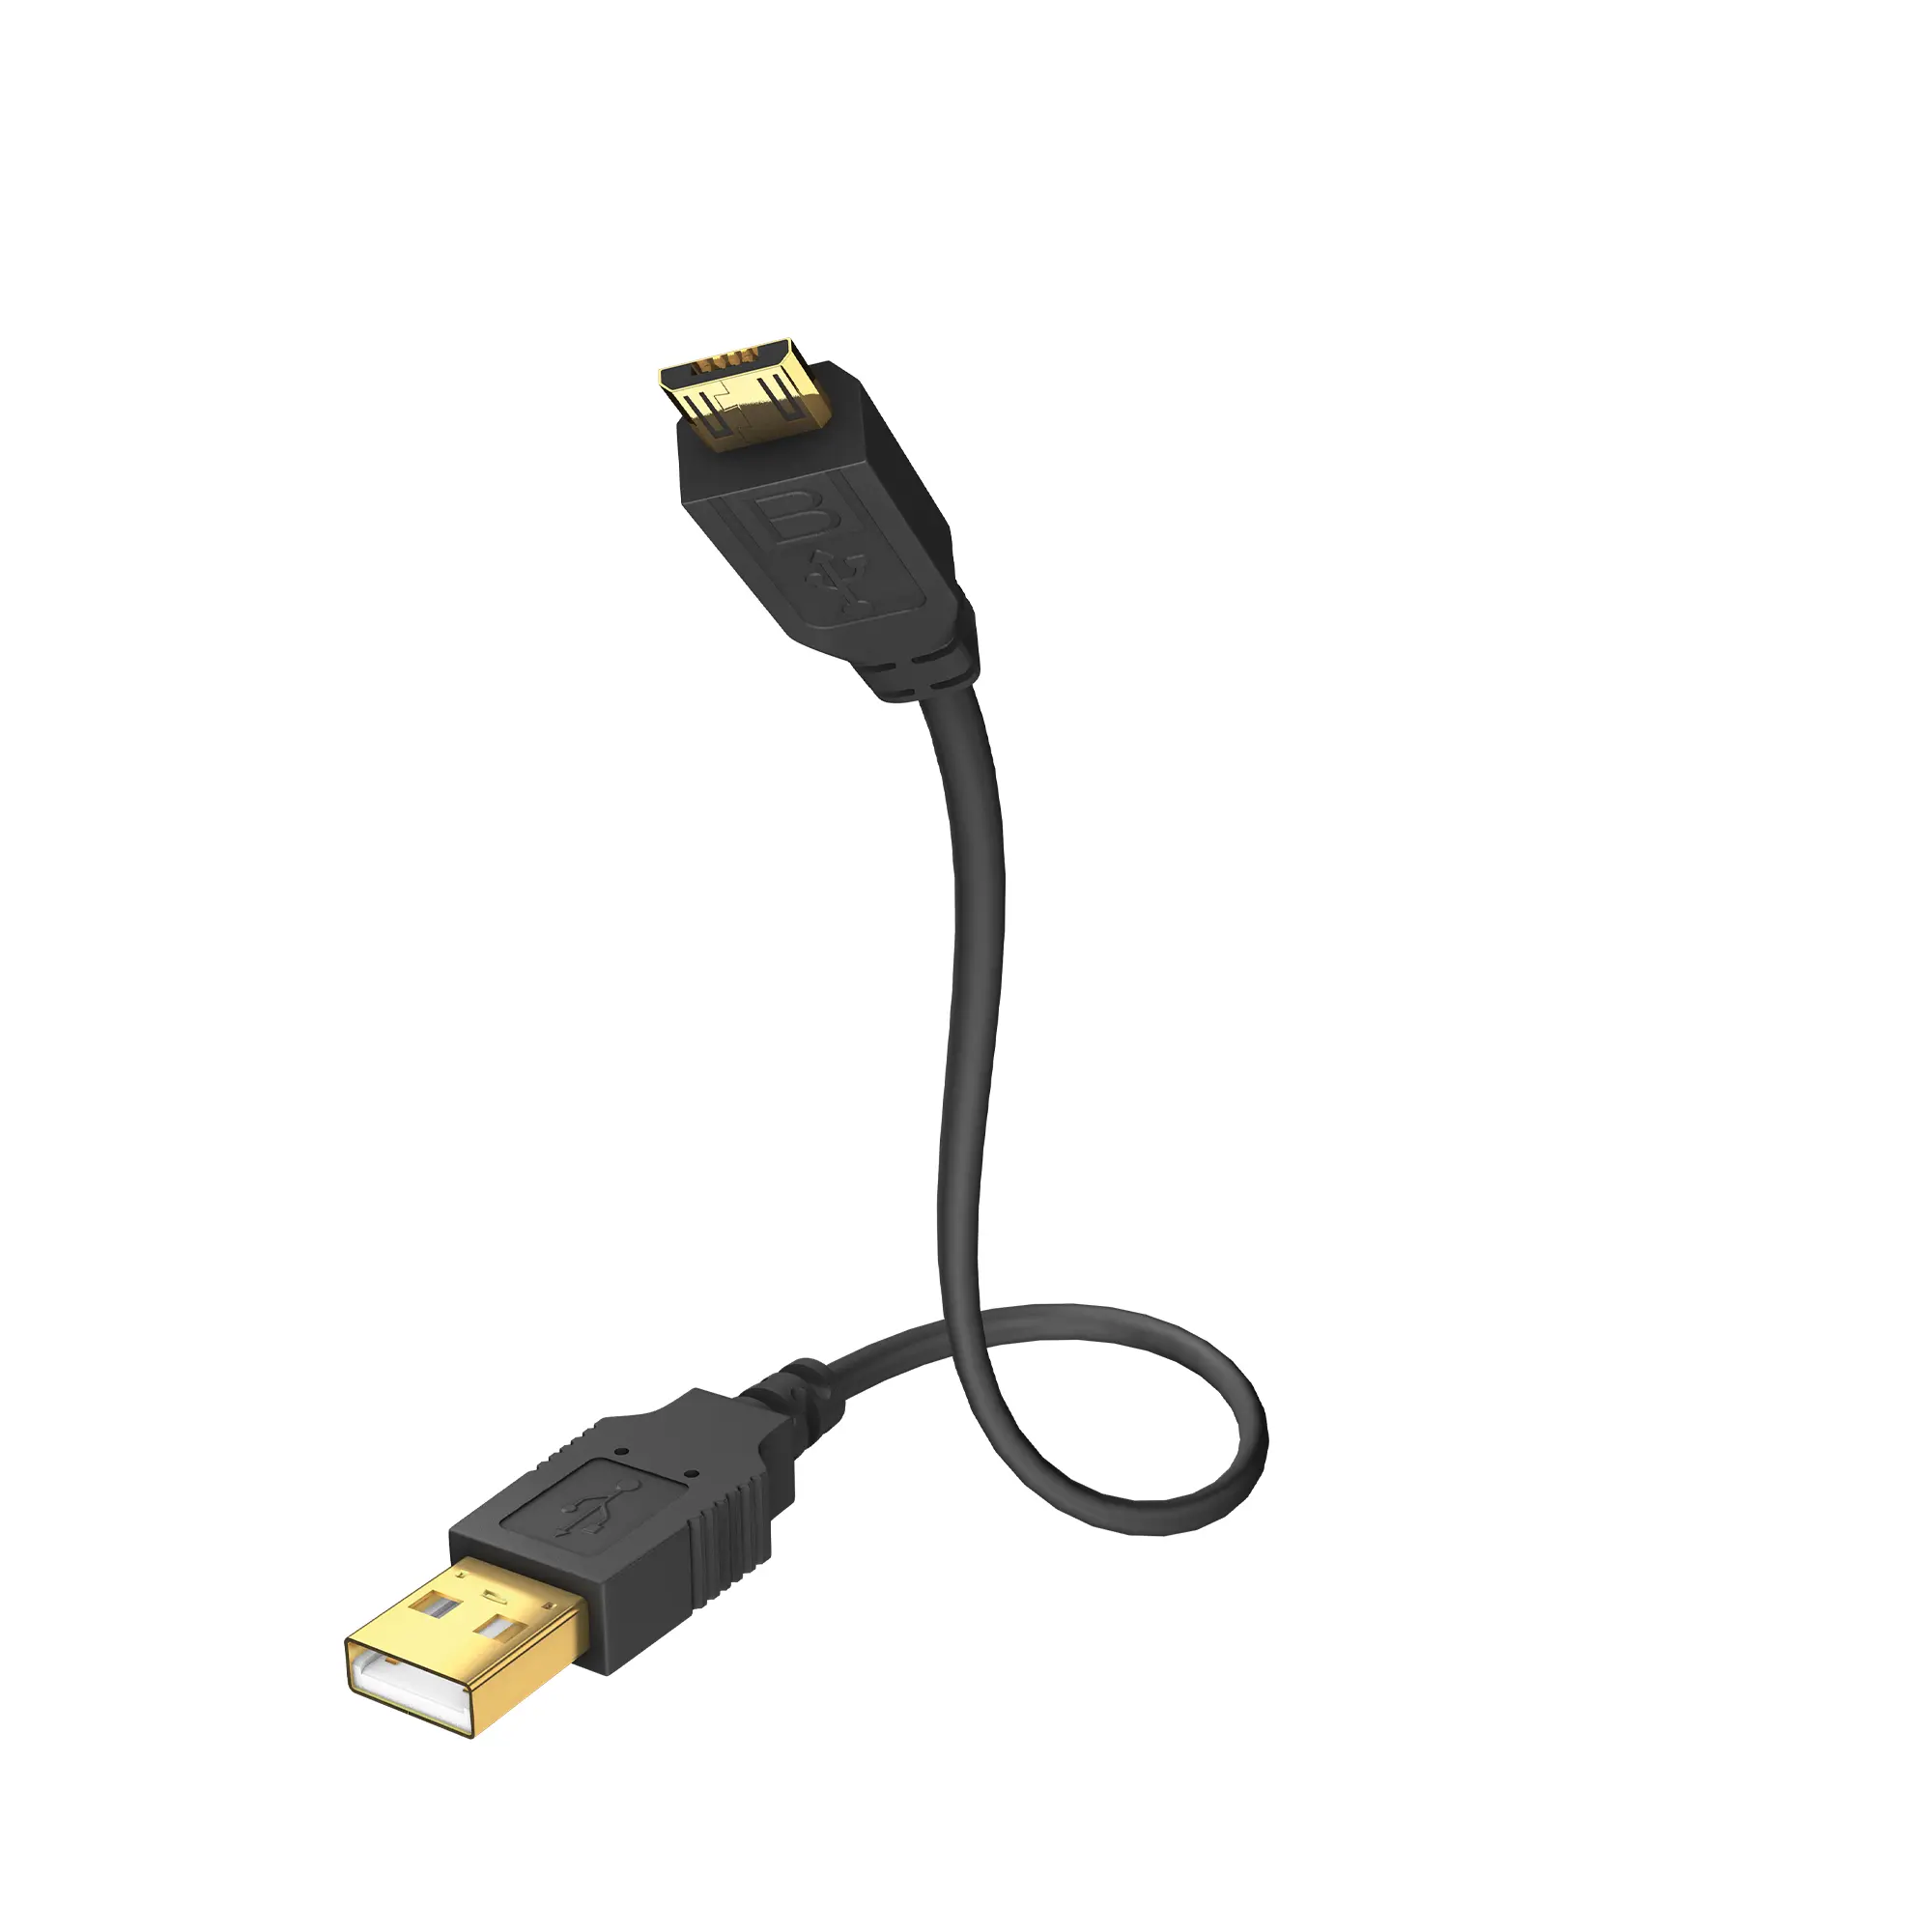 High-speed USB A < > USB Micro B